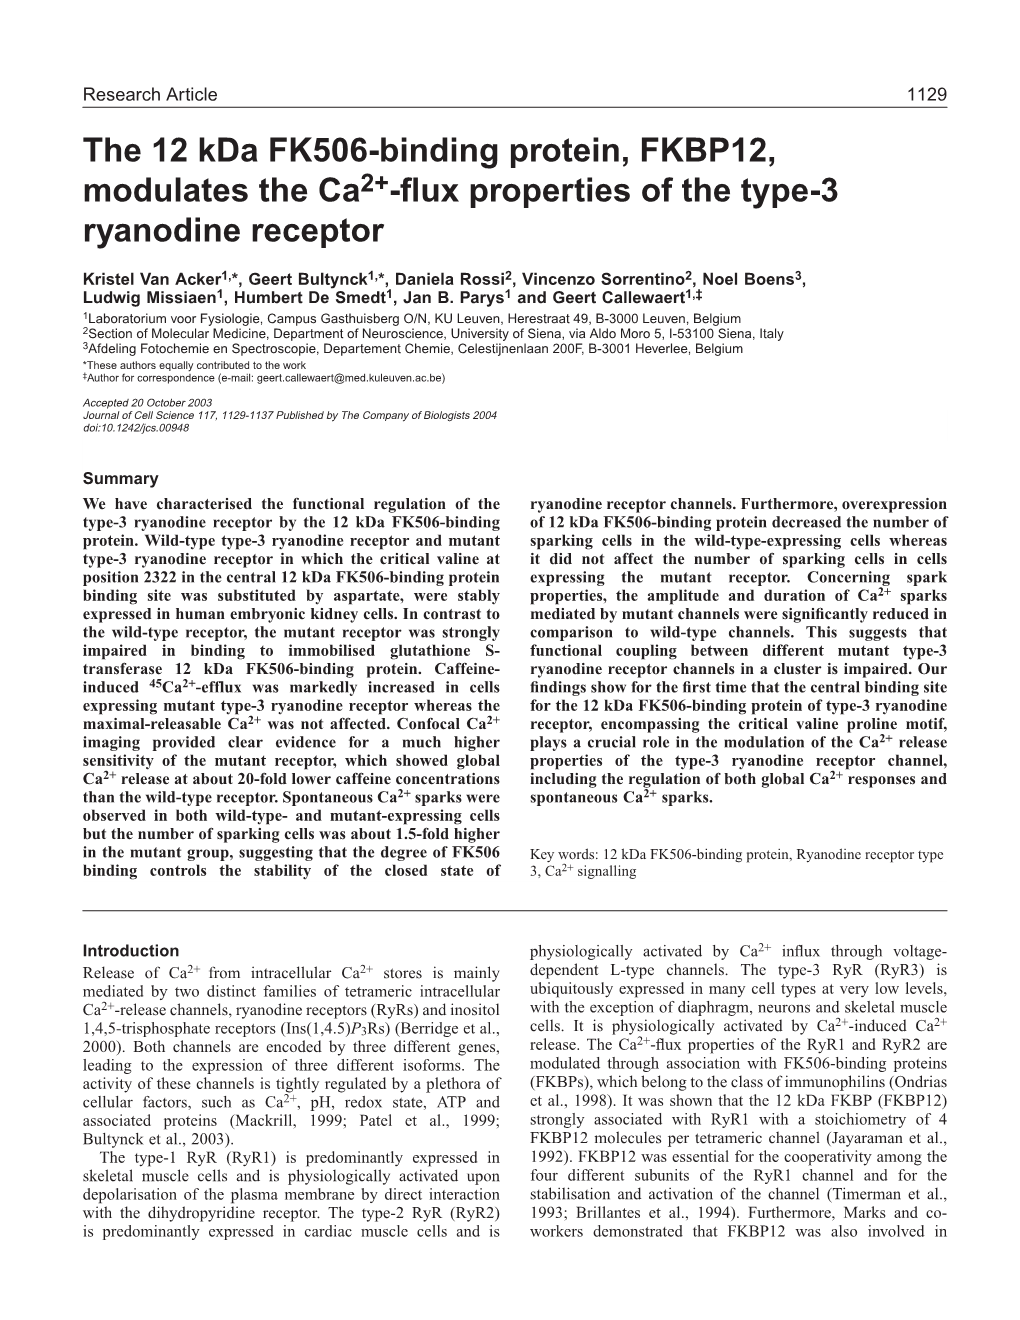 The 12 Kda FK506-Binding Protein, FKBP12, Modulates the Ca2+-Flux Properties of the Type-3 Ryanodine Receptor